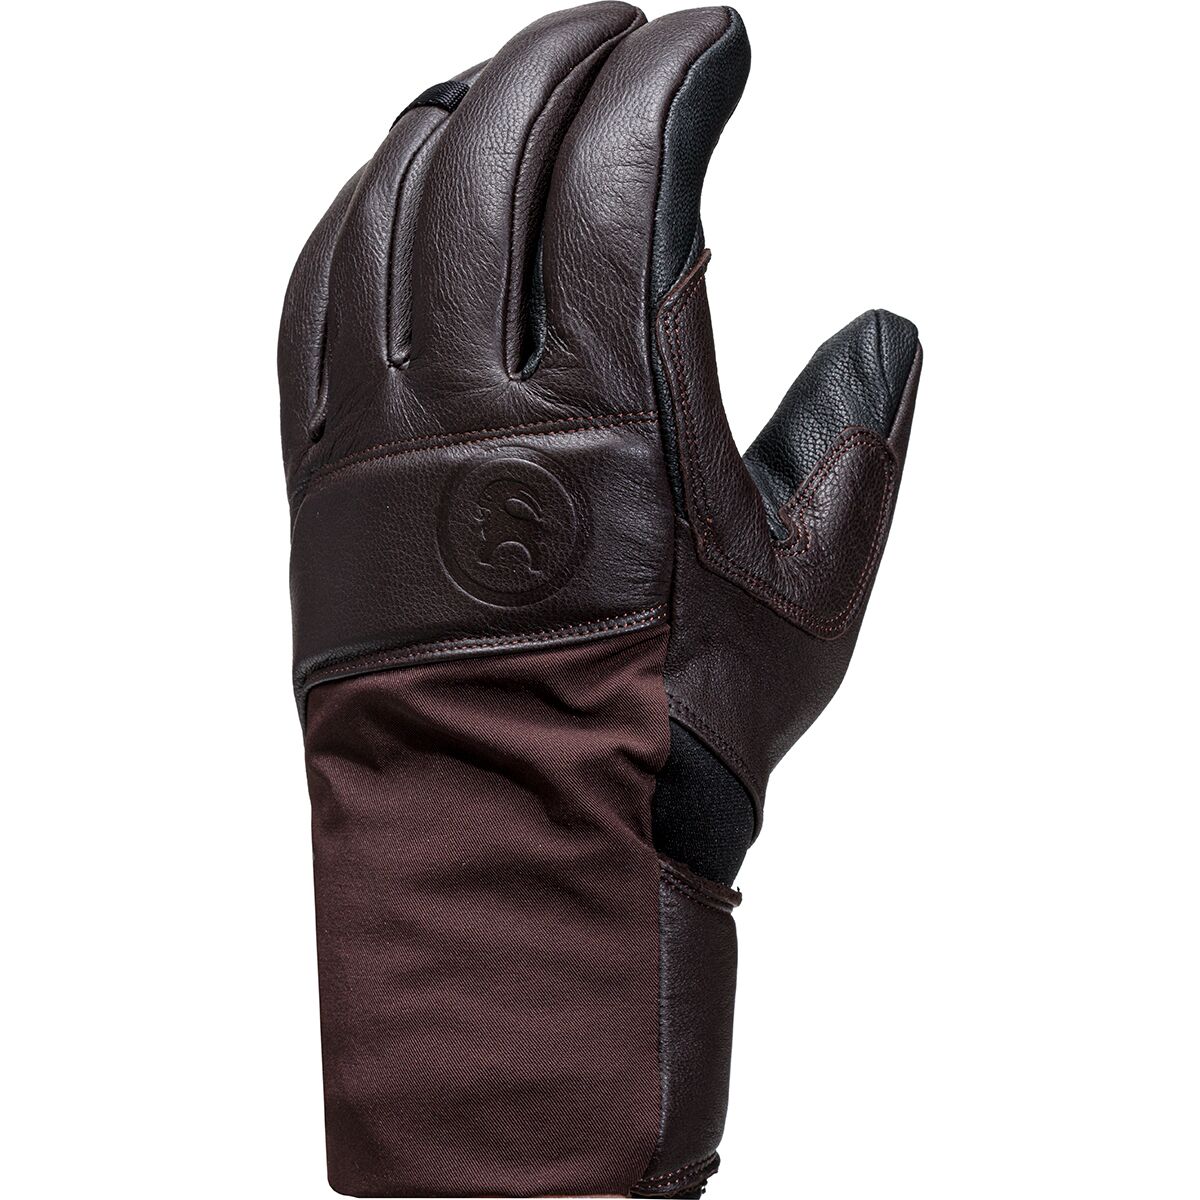 Backcountry GORE-TEX Snow Glove